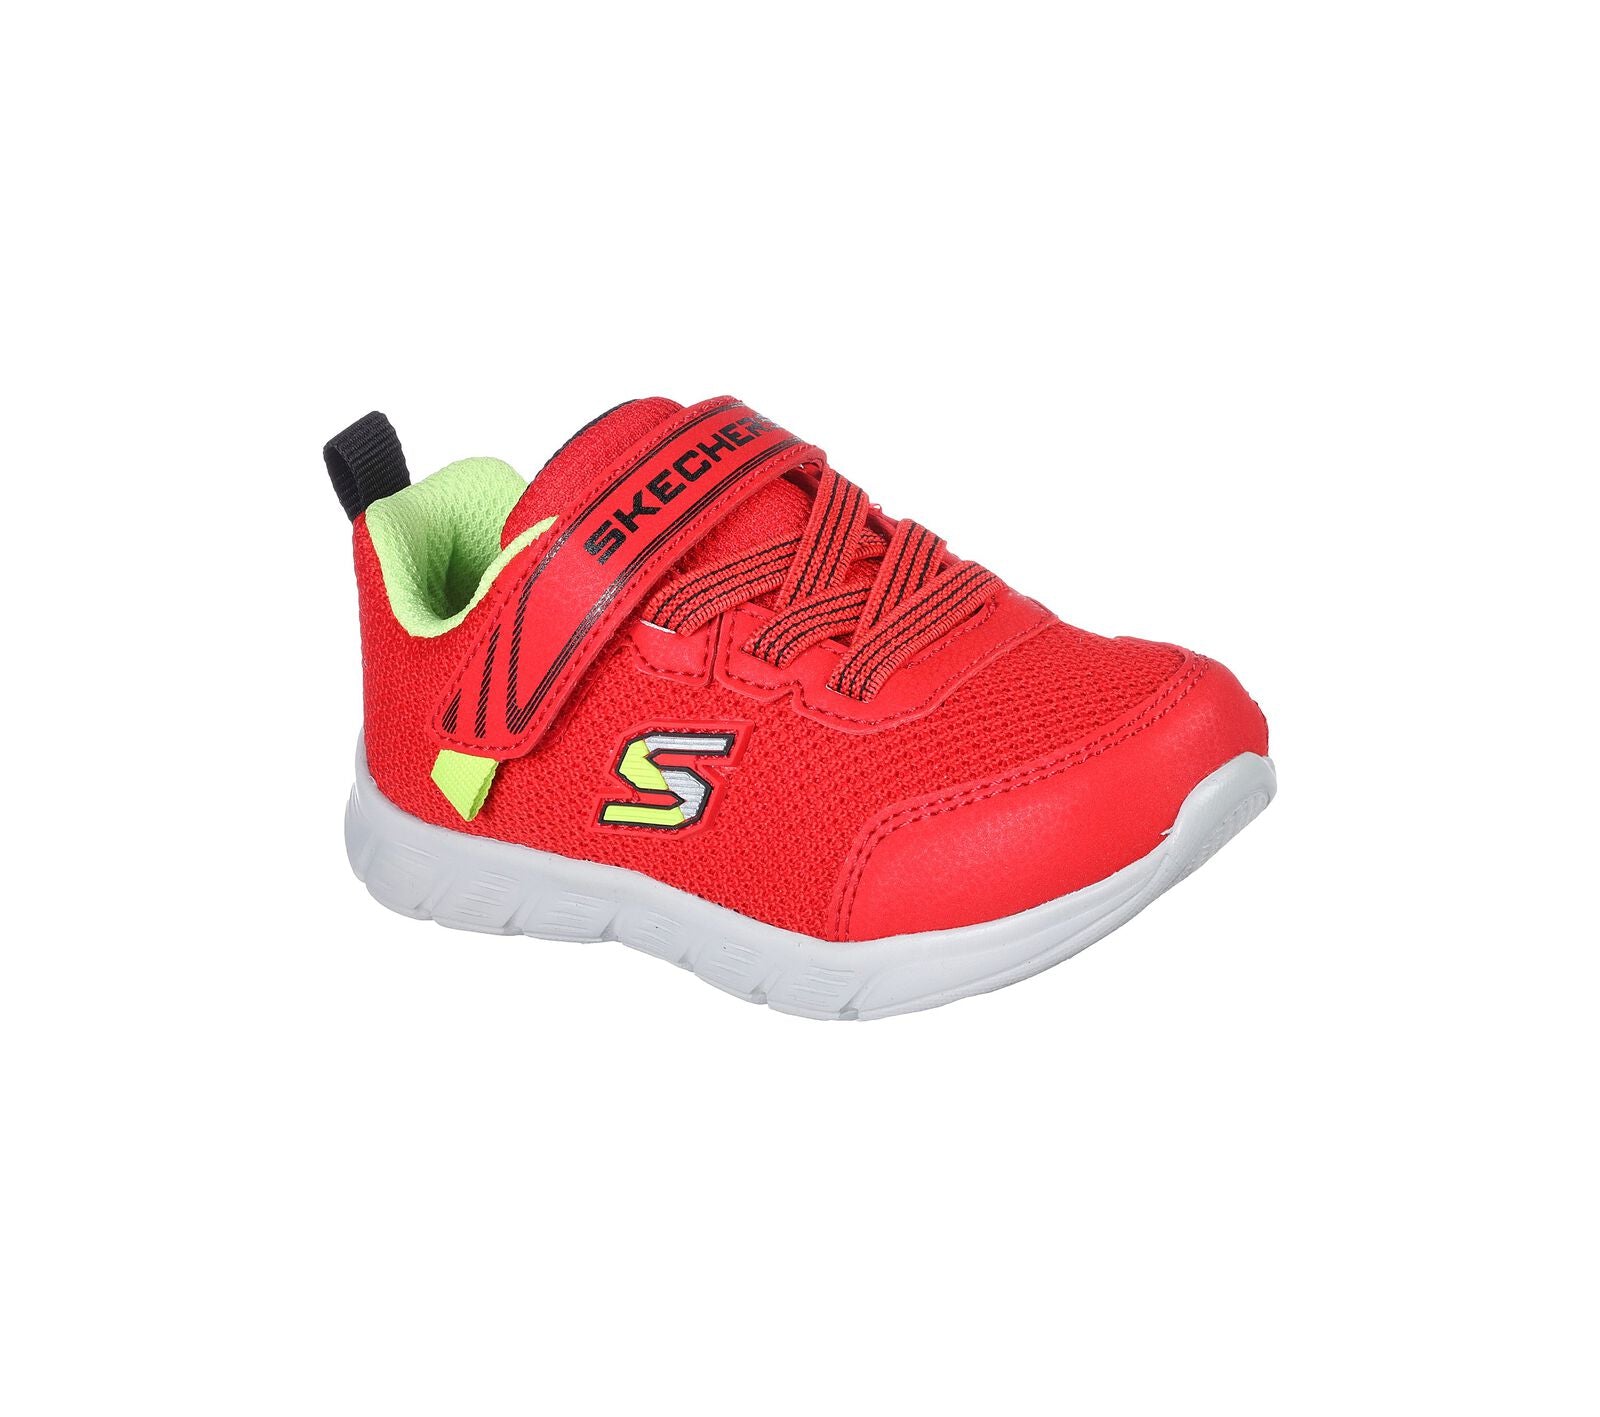 Skechers comfy flex red - Kirbys Footwear Ltd